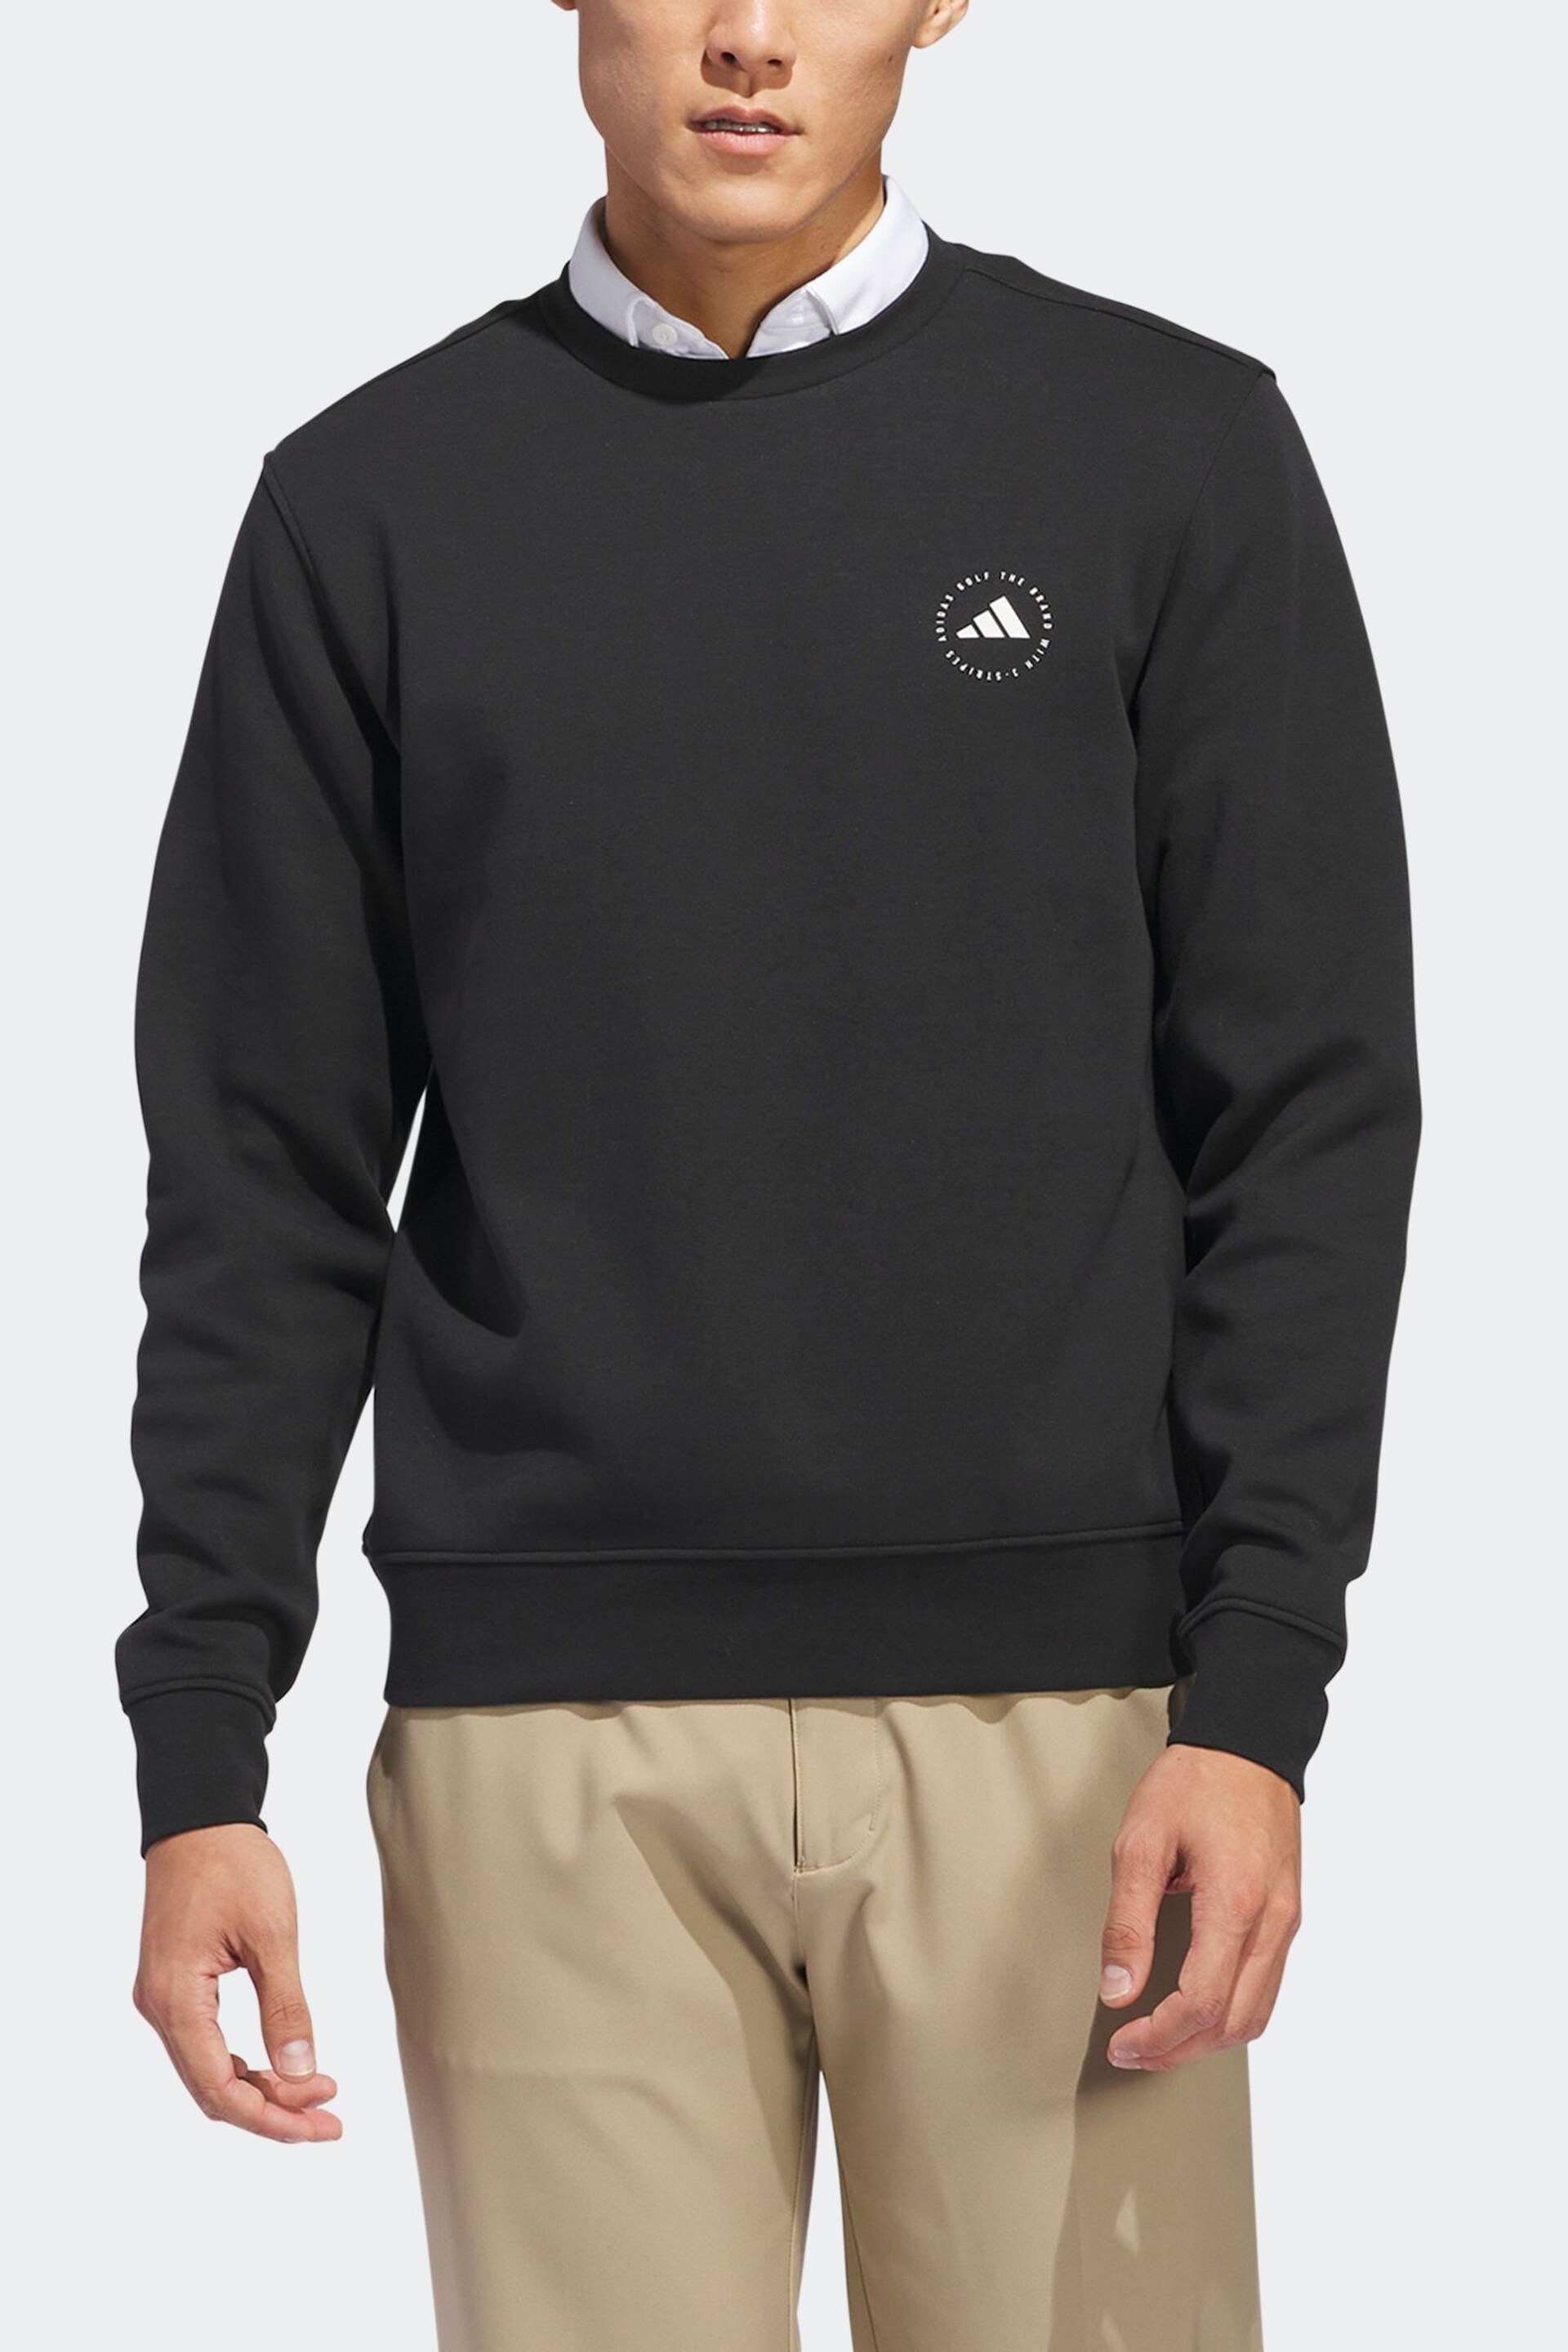 adidas Golf Pebble Crewneck Sweatshirt - Image 4 of 7